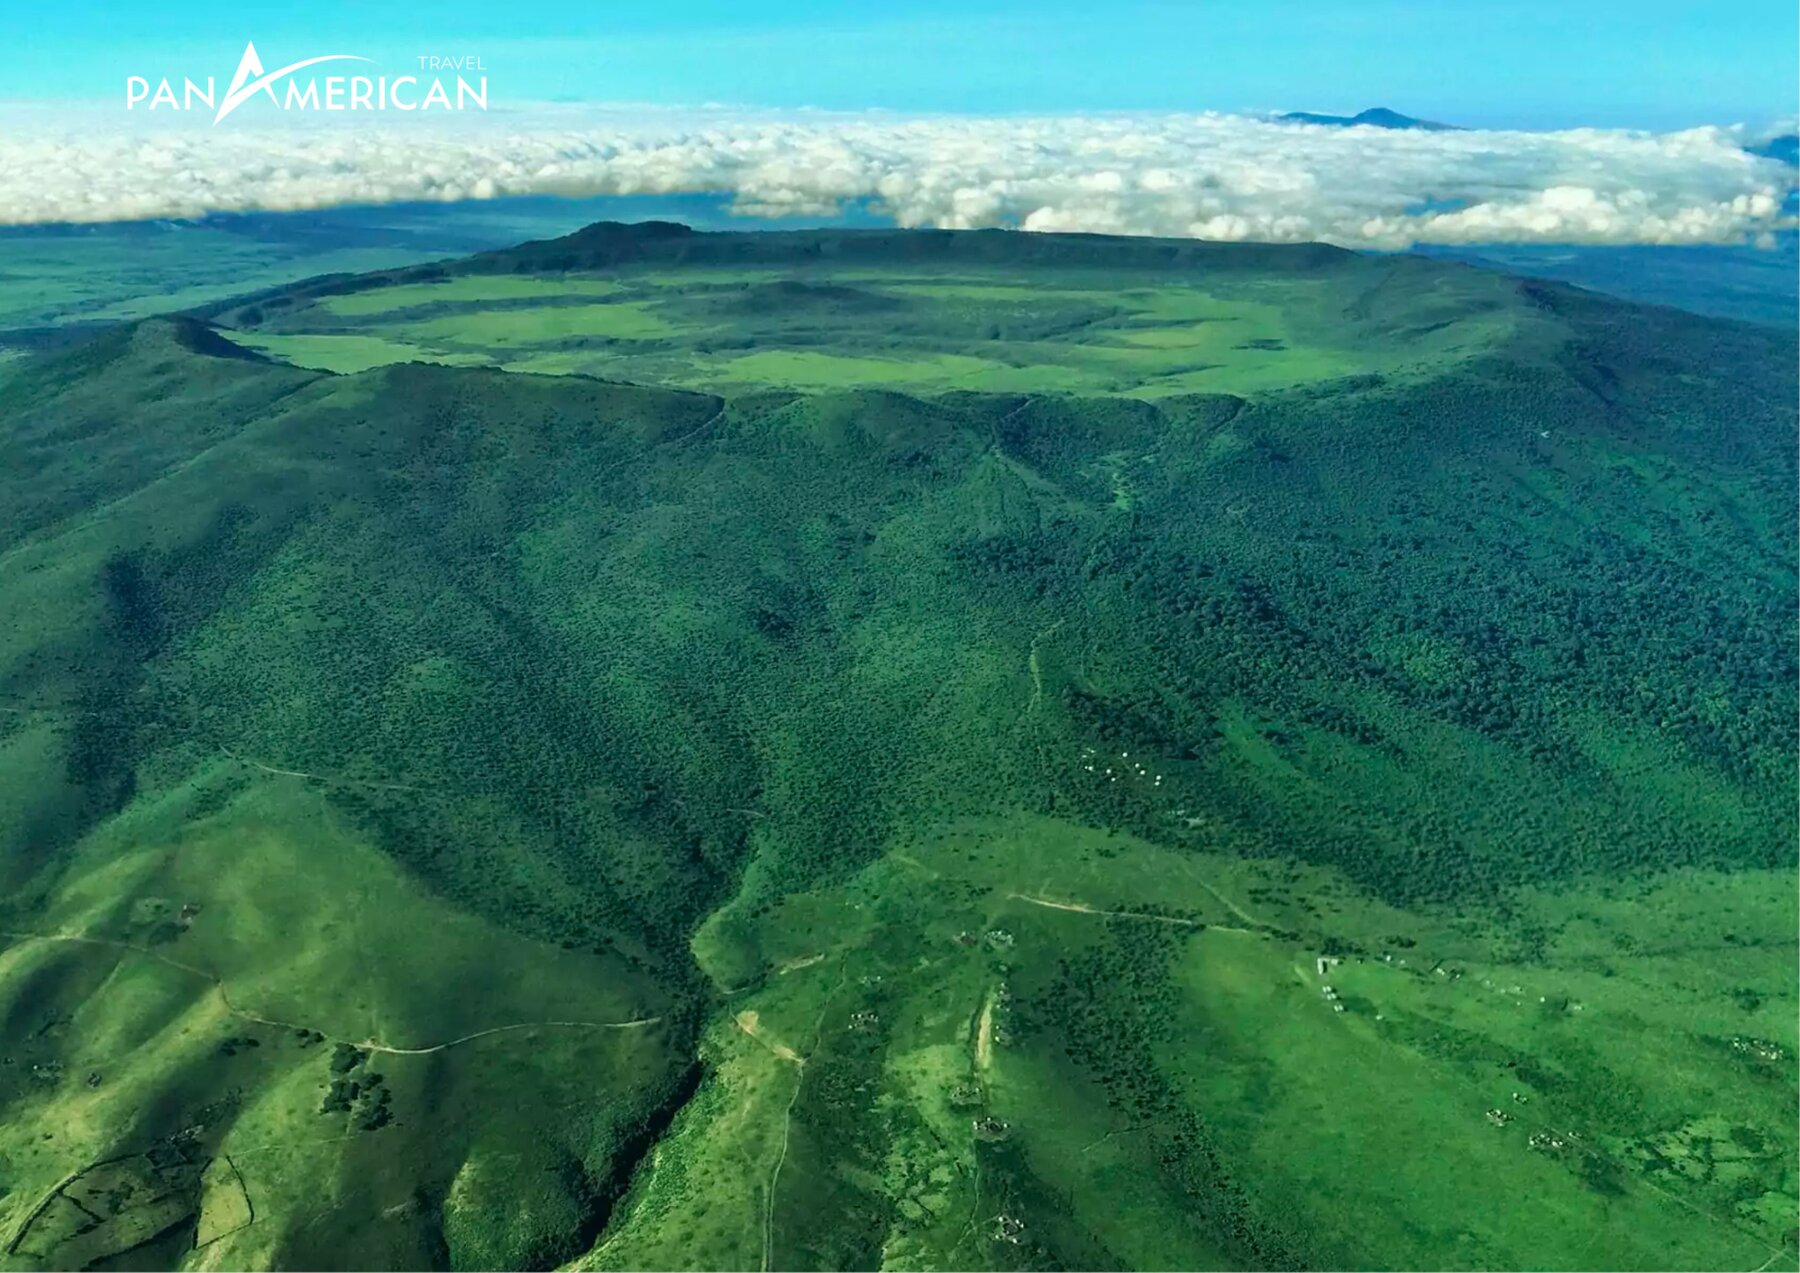 Miệng núi lửa Ngorongoro